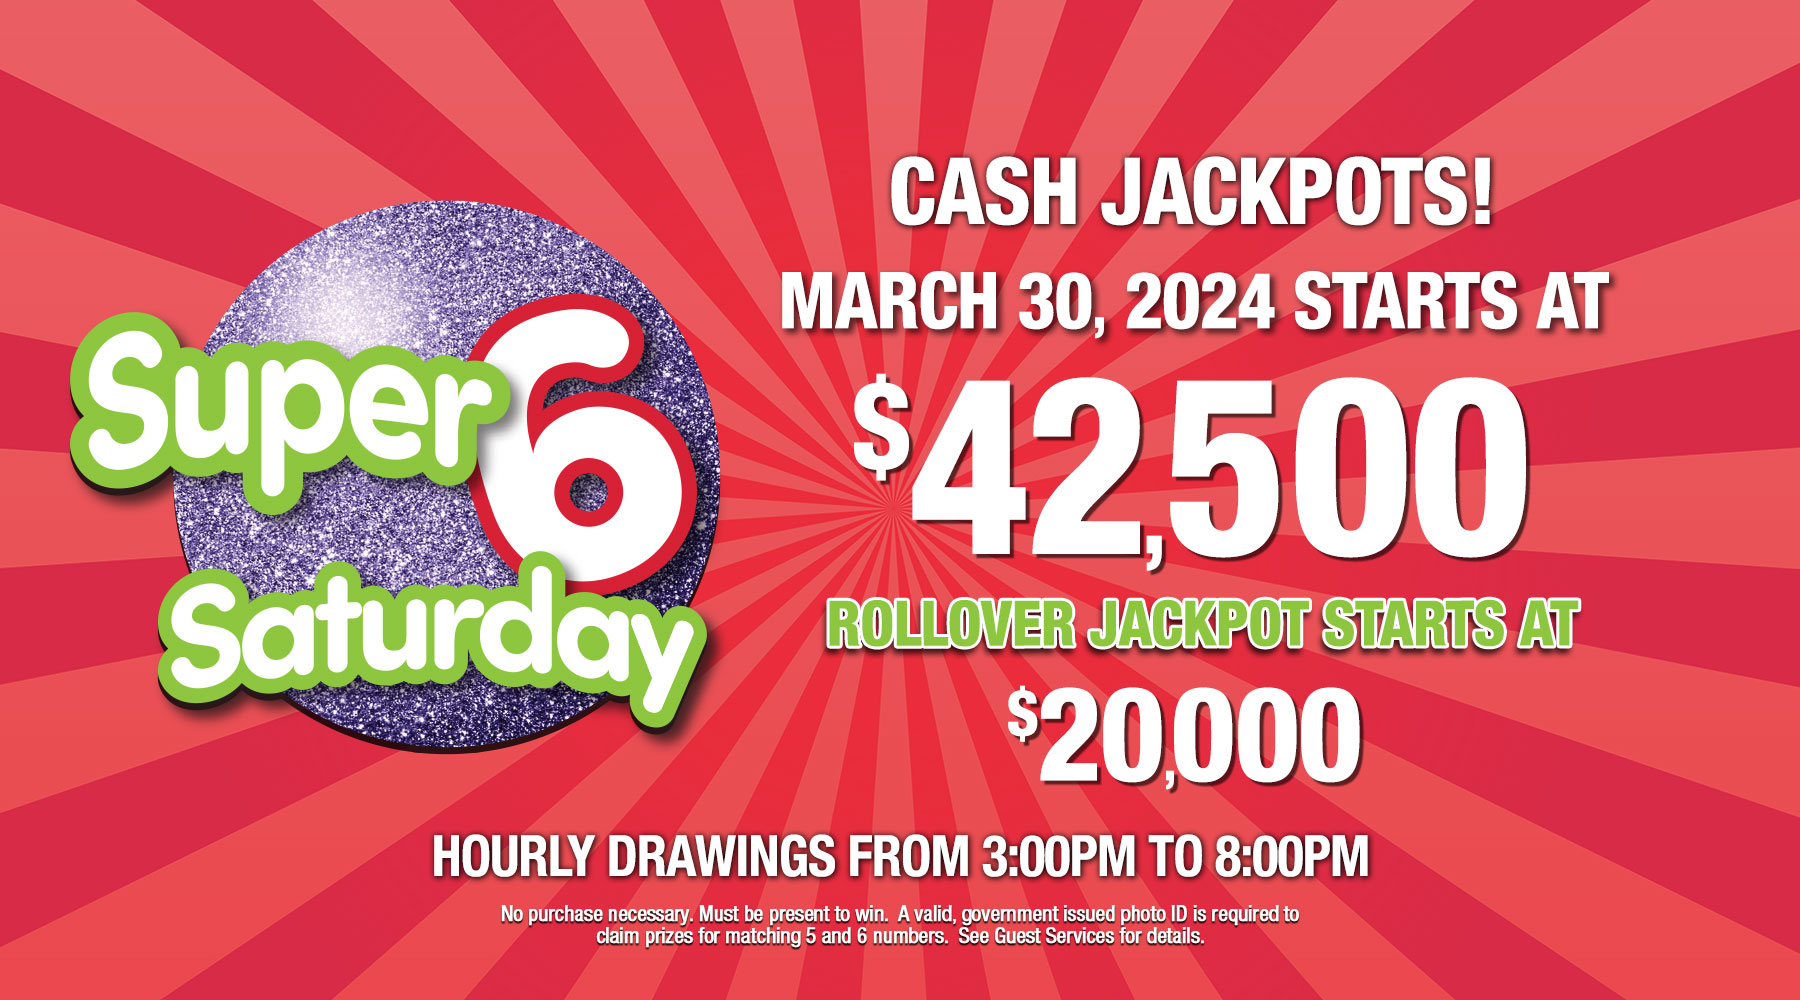 Super 6 Saturday CASH jackpot starts at $42,500 on Saturday, March 30, 2024